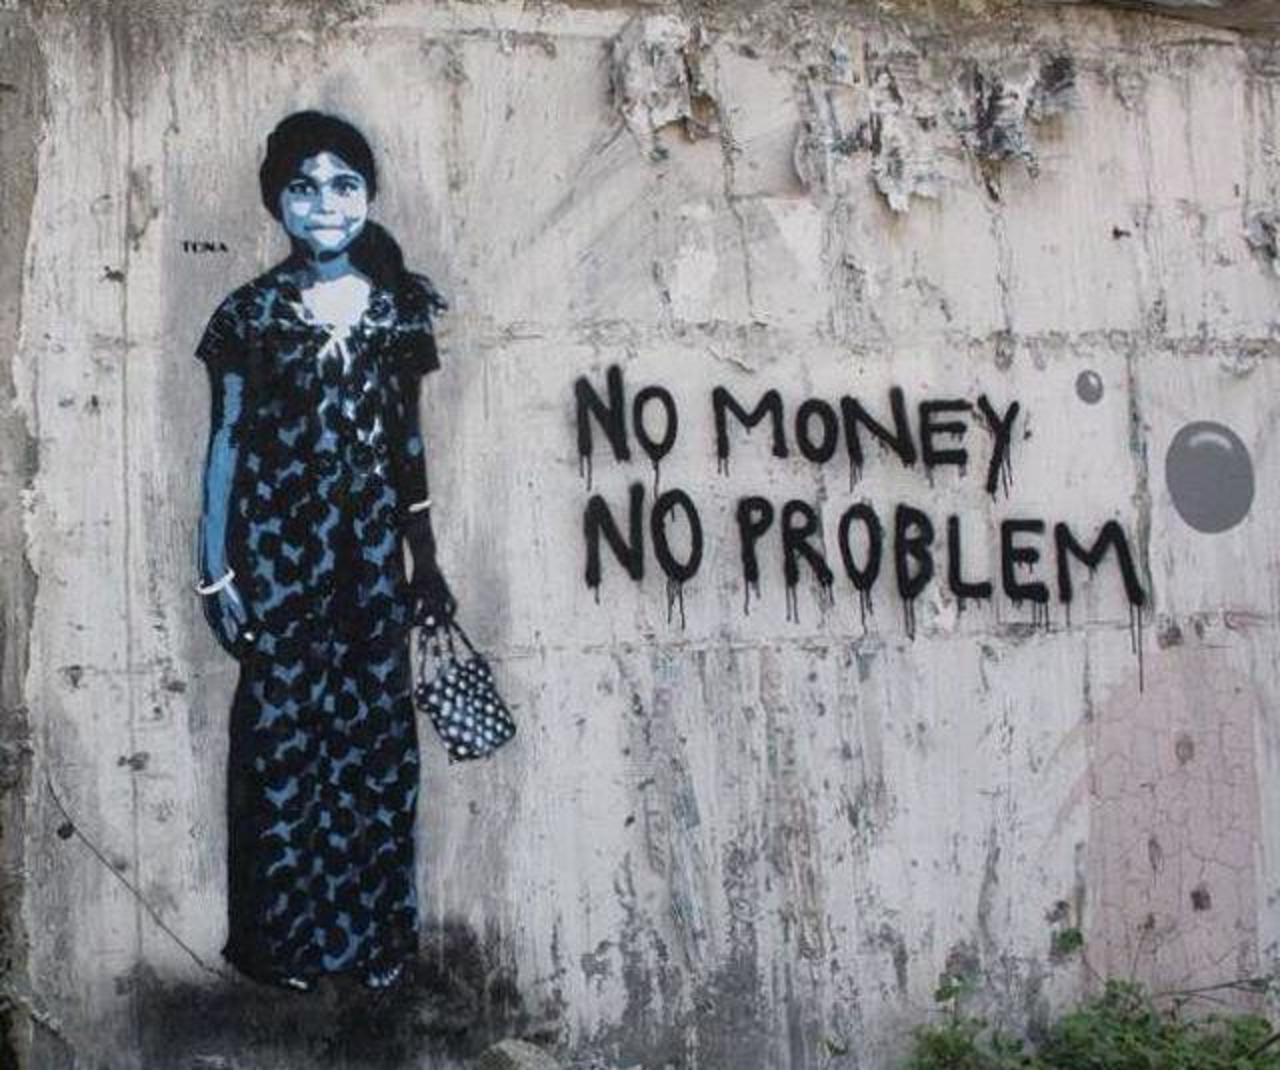 No Money No Problem
Street Art by TONA in Pokara, Nepal 

#art #arte #graffiti #streetart http://t.co/nBWtLsv9A3